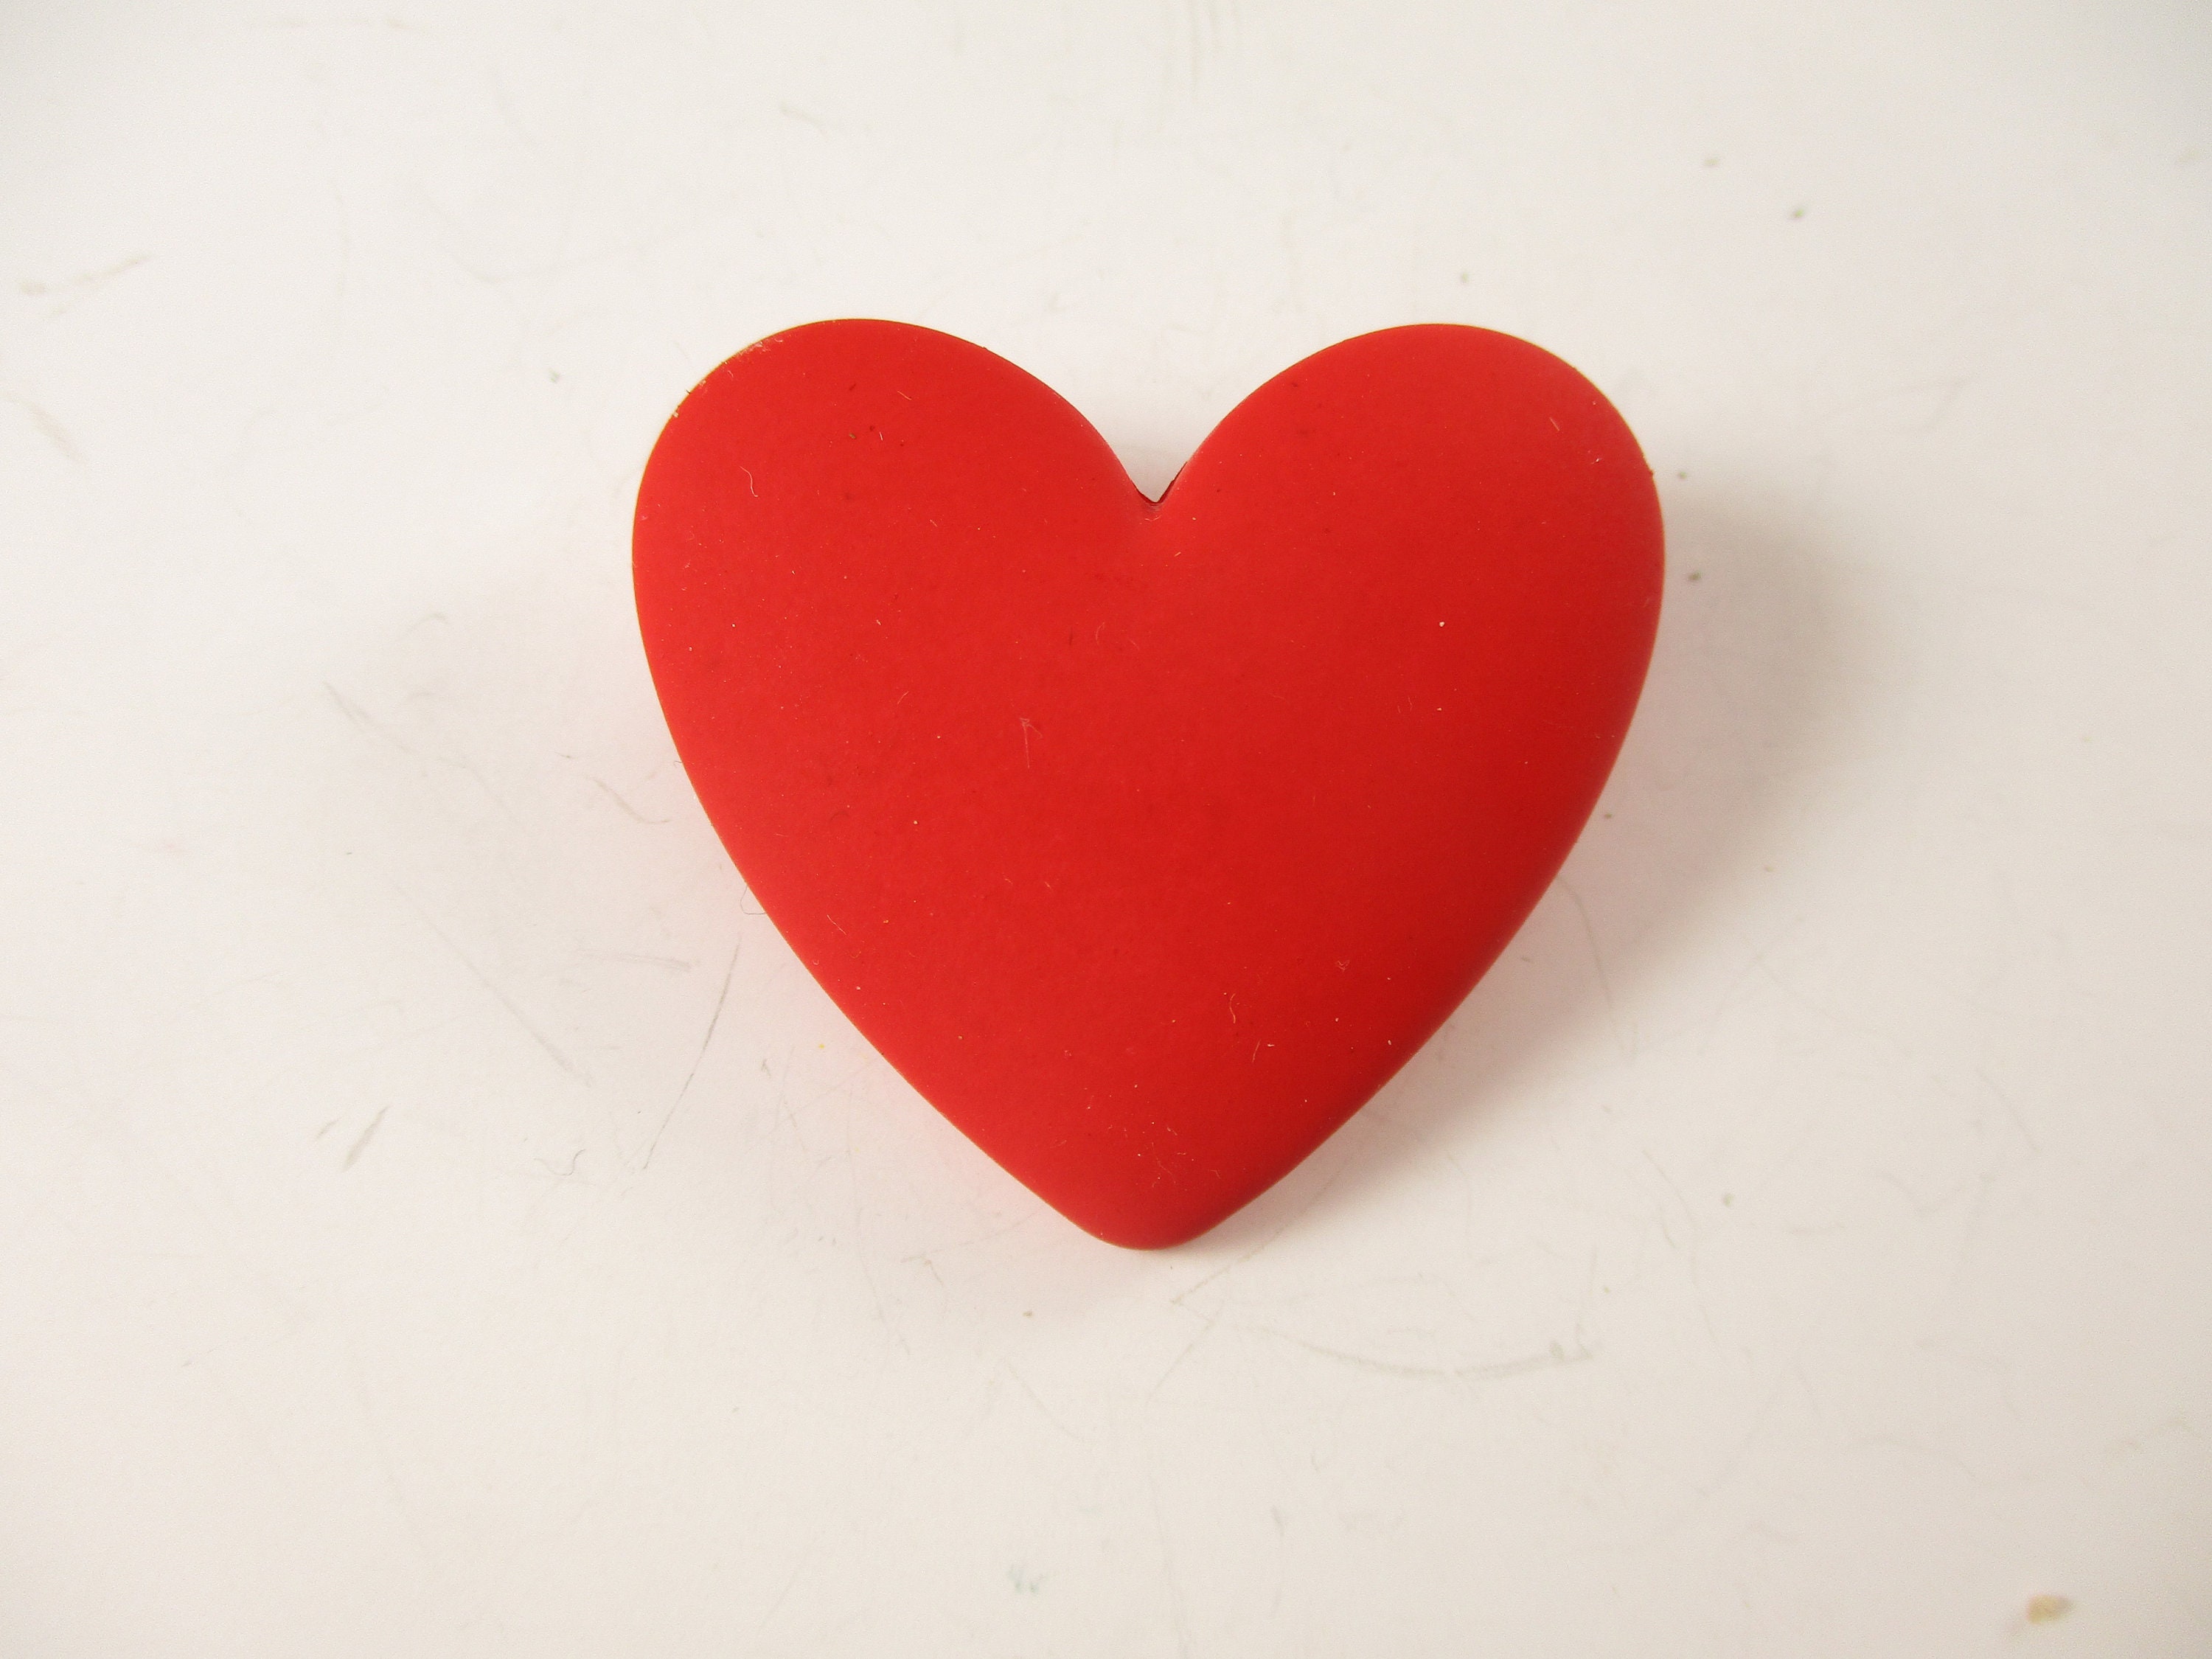 HALDER Cute Red Heart Enamel Pins Heart Shape With Eyes Brooch Denim  Jackets Lapel Pin Decoration Badge Fashion Jewelry Gift